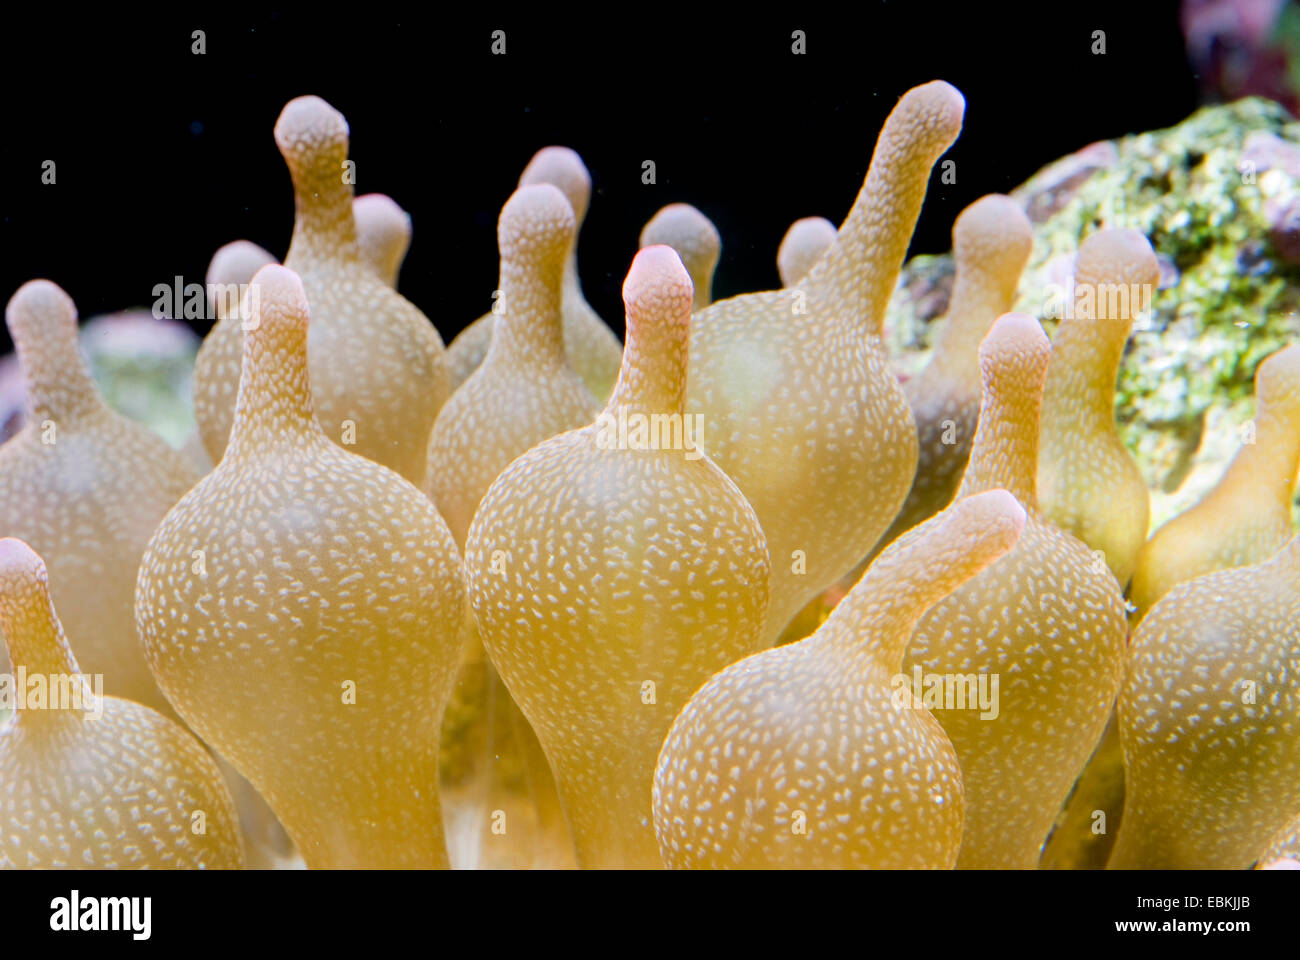 vierfarbige Anemone, Blase-Tip Anemone, Birne-Tip Anemone, Birne-Tentakel Seeanemone, kastanienbraunen Anemone (Entacmaea Quadricolor), Nahaufnahme Stockfoto